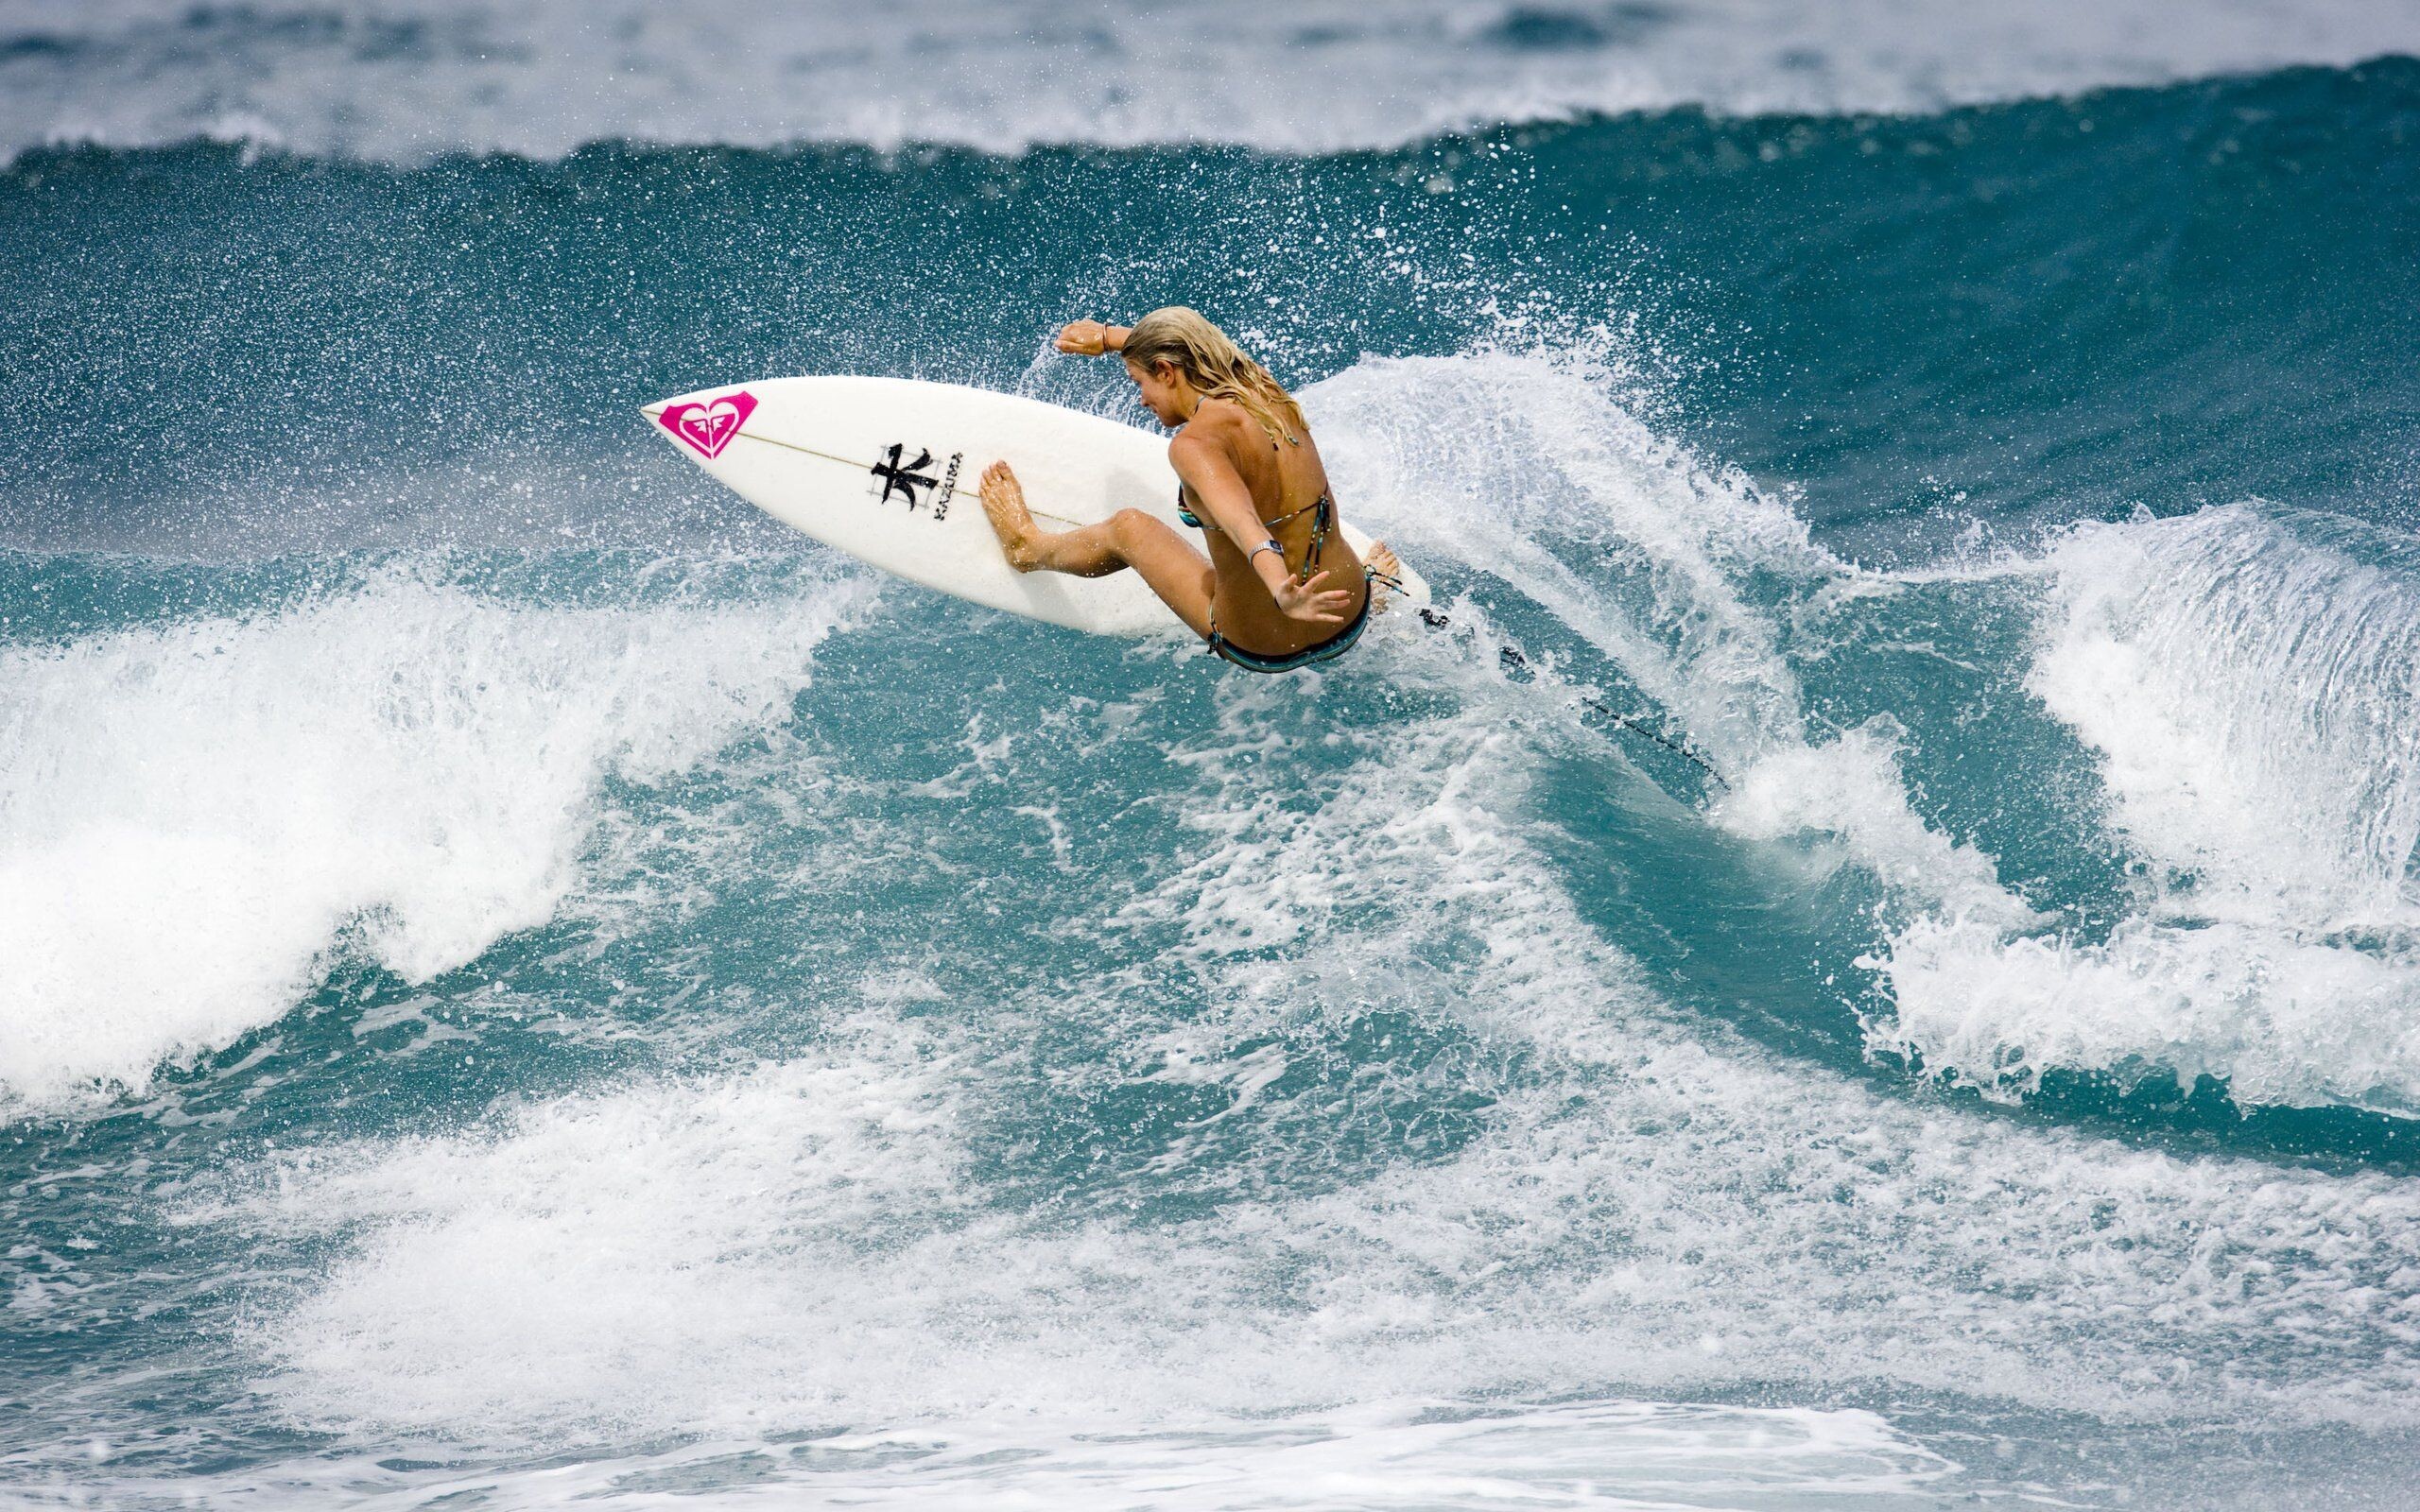 Girl Surfing: Kazuma surfboard in action, A leading Hawaiian longboard manufacturer, Wave riding. 2560x1600 HD Wallpaper.